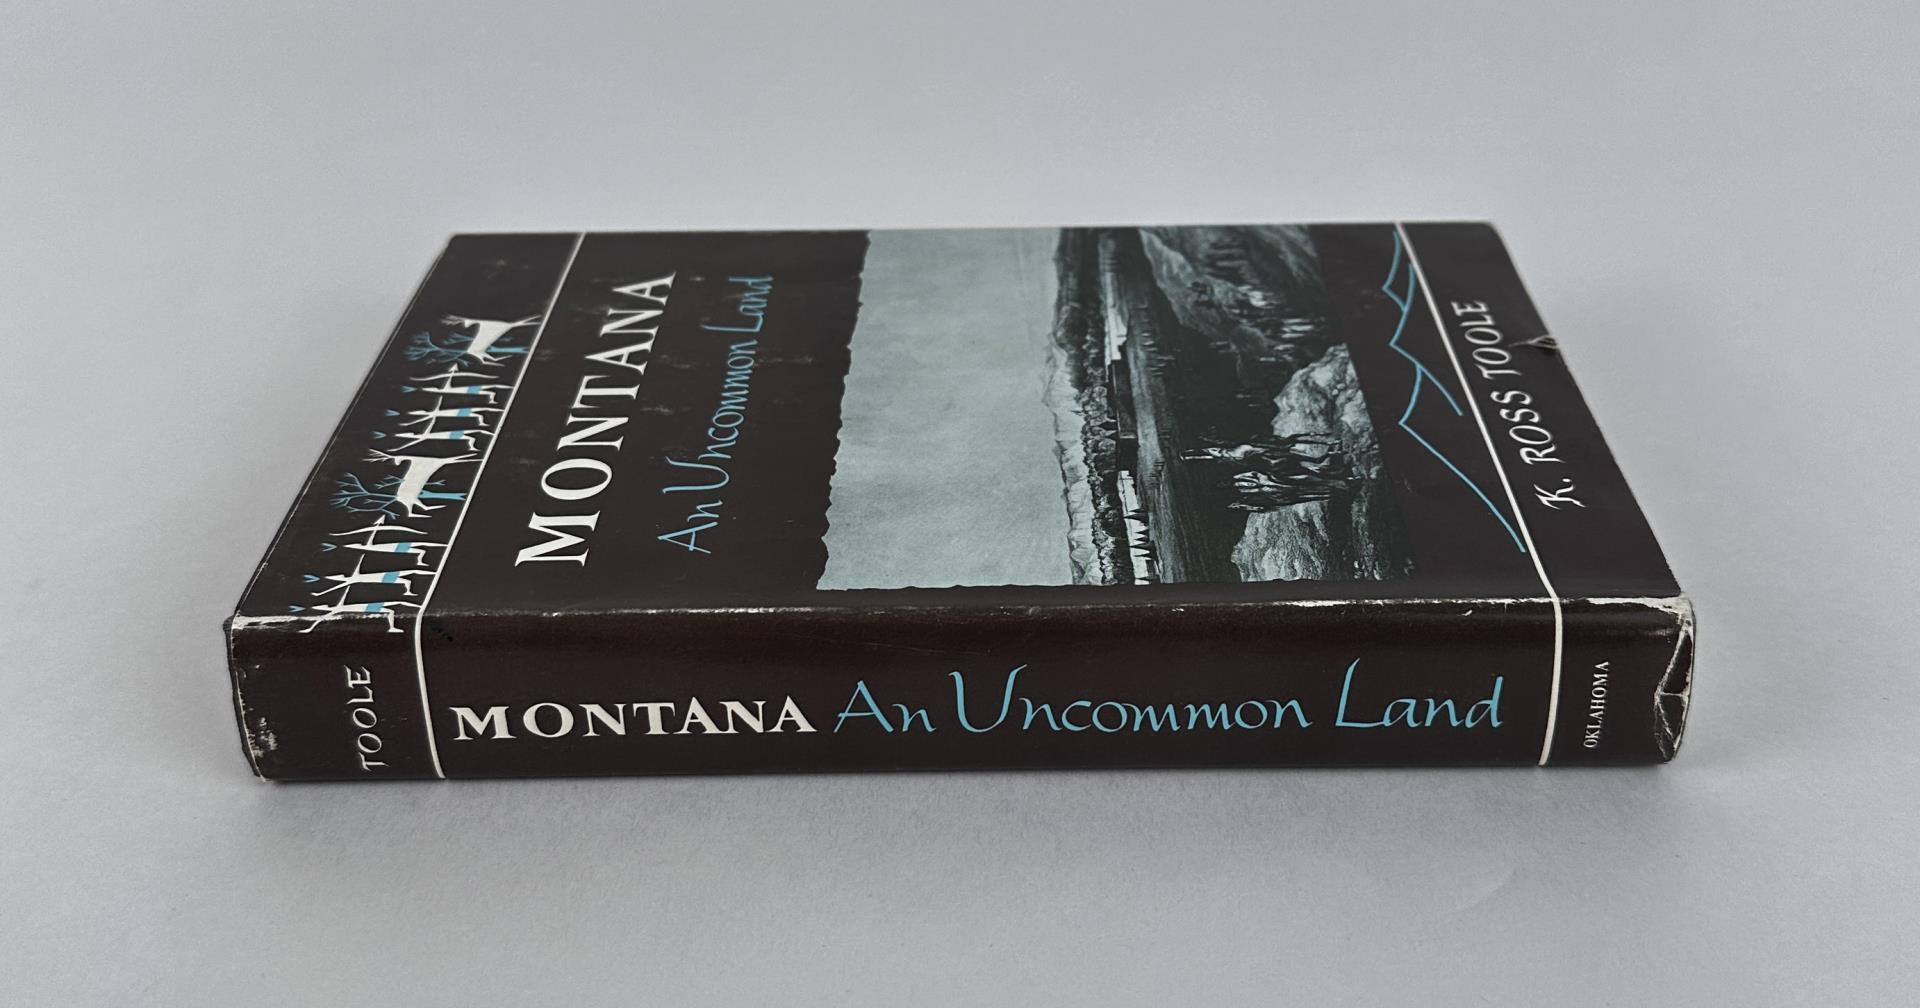 Montana An Uncommon Land